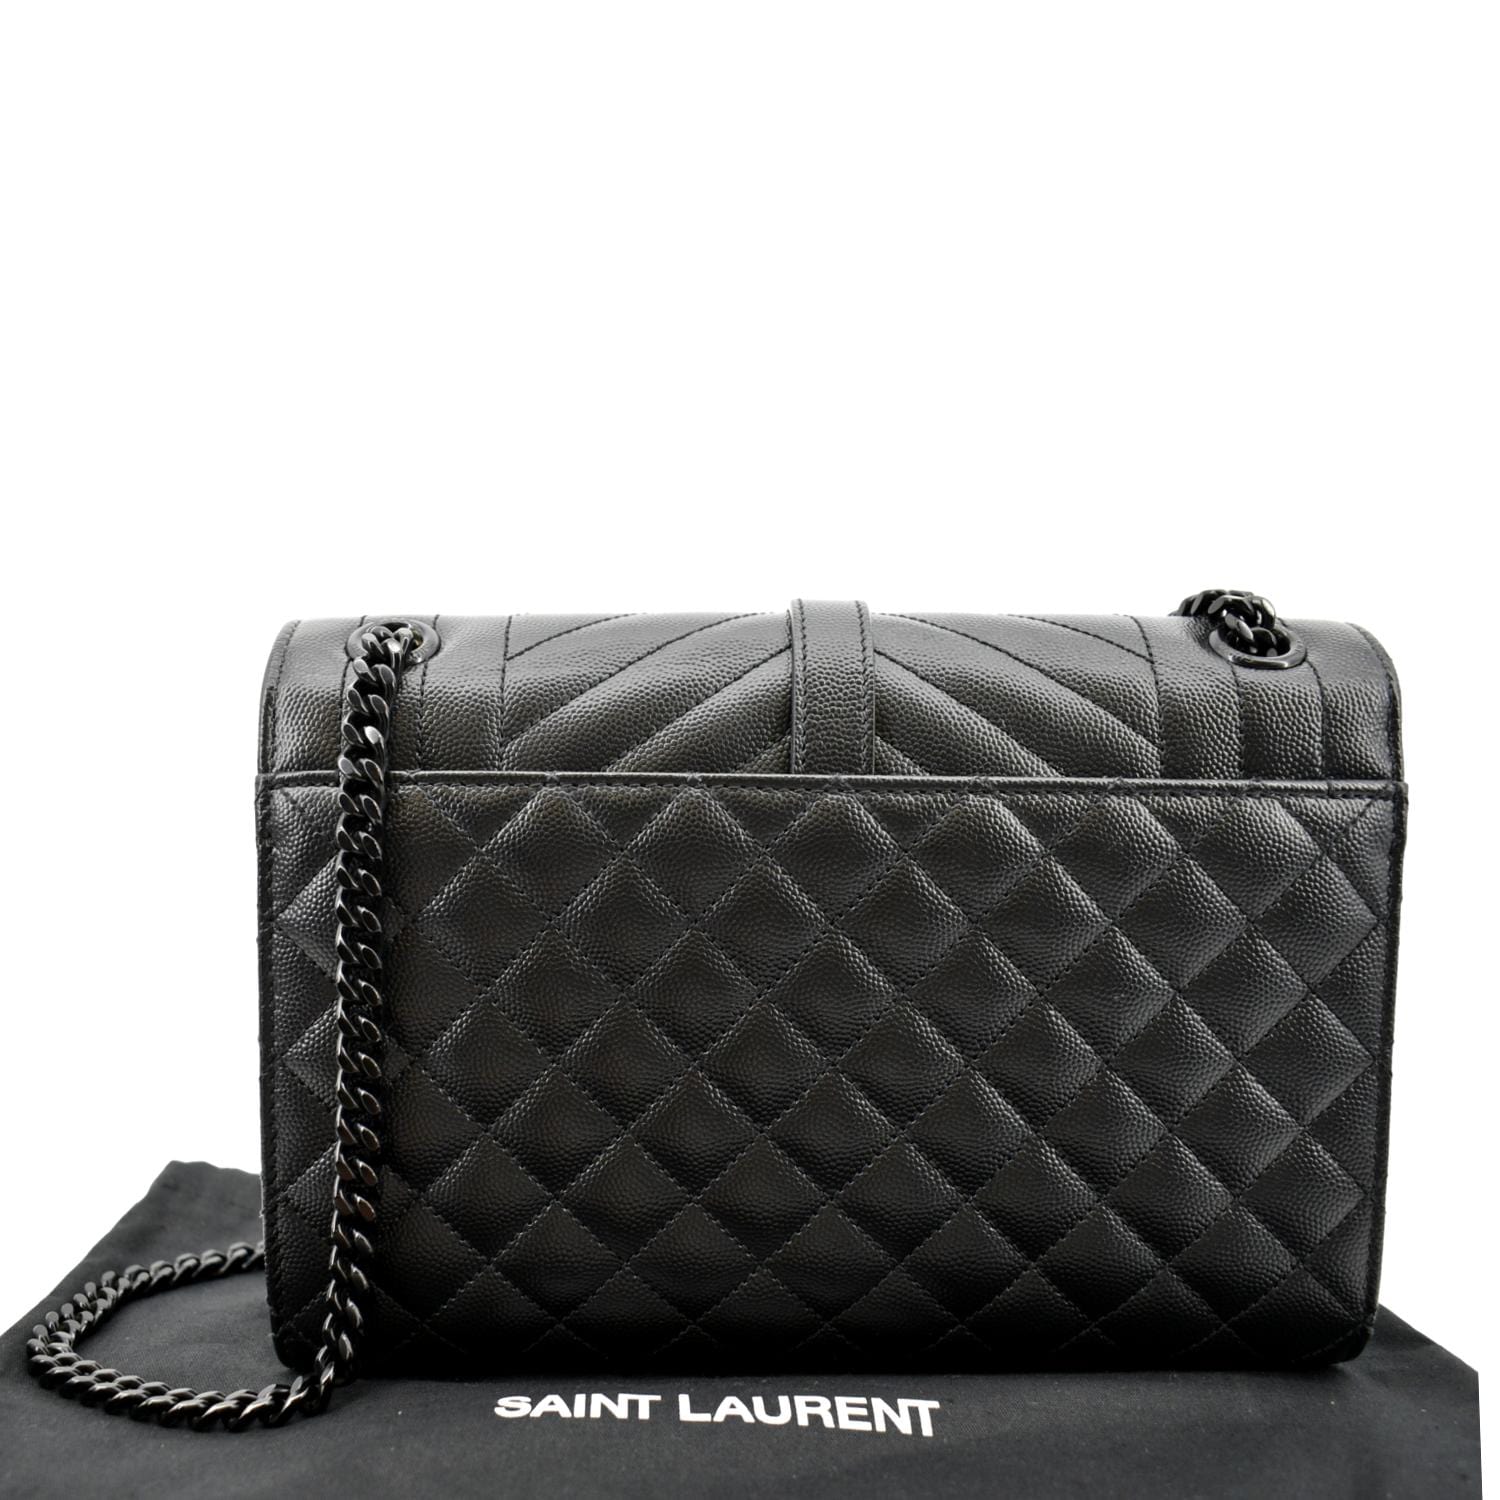 Saint Laurent Small Leather Envelope Bag